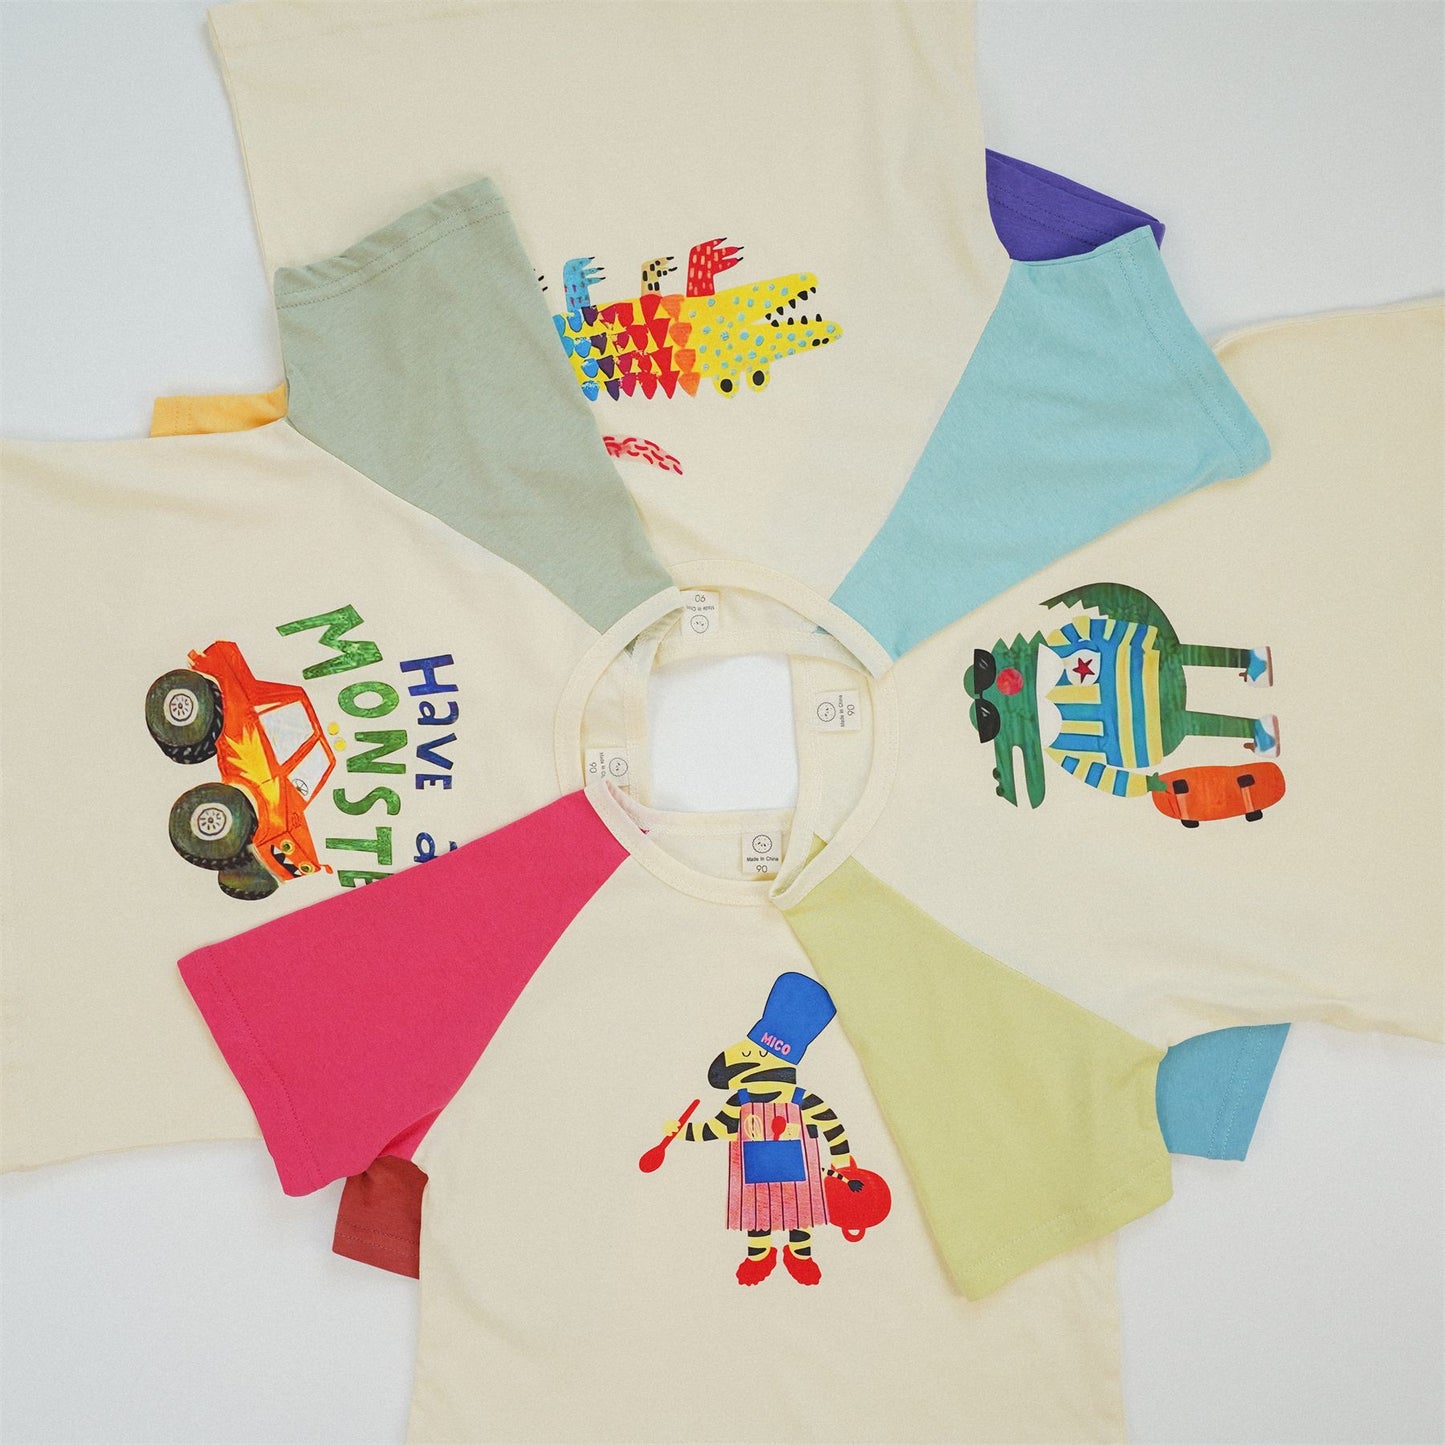 【S4042637】夏季款 兒童短袖T恤 拼色卡通寶寶圓領上衣-4色